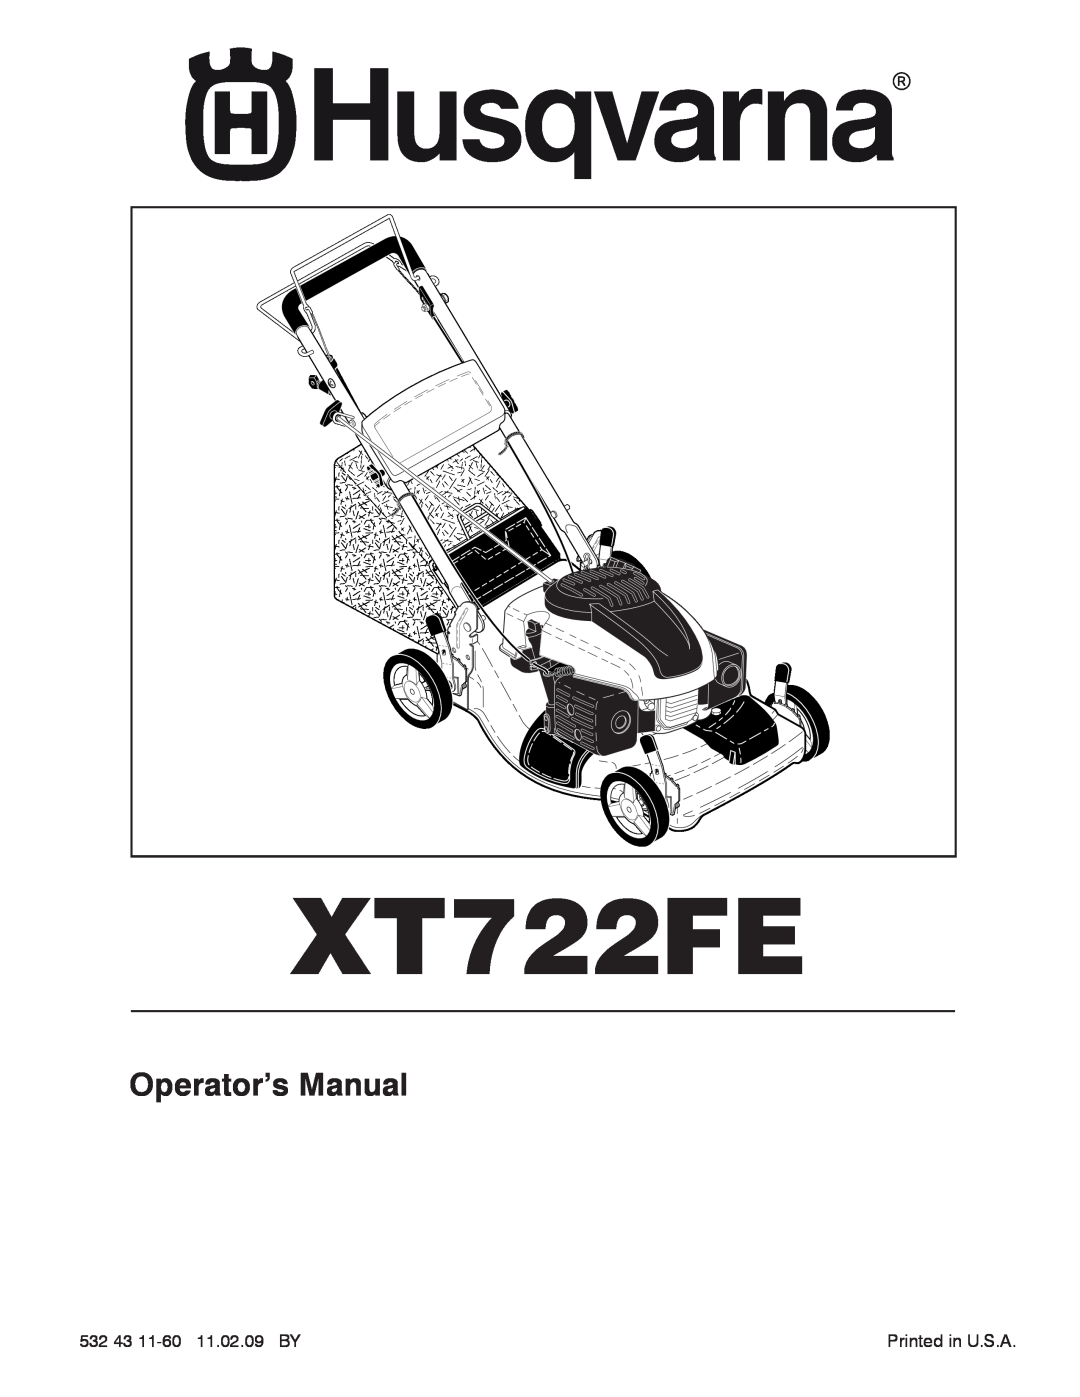 Husqvarna XT722FE owner manual 